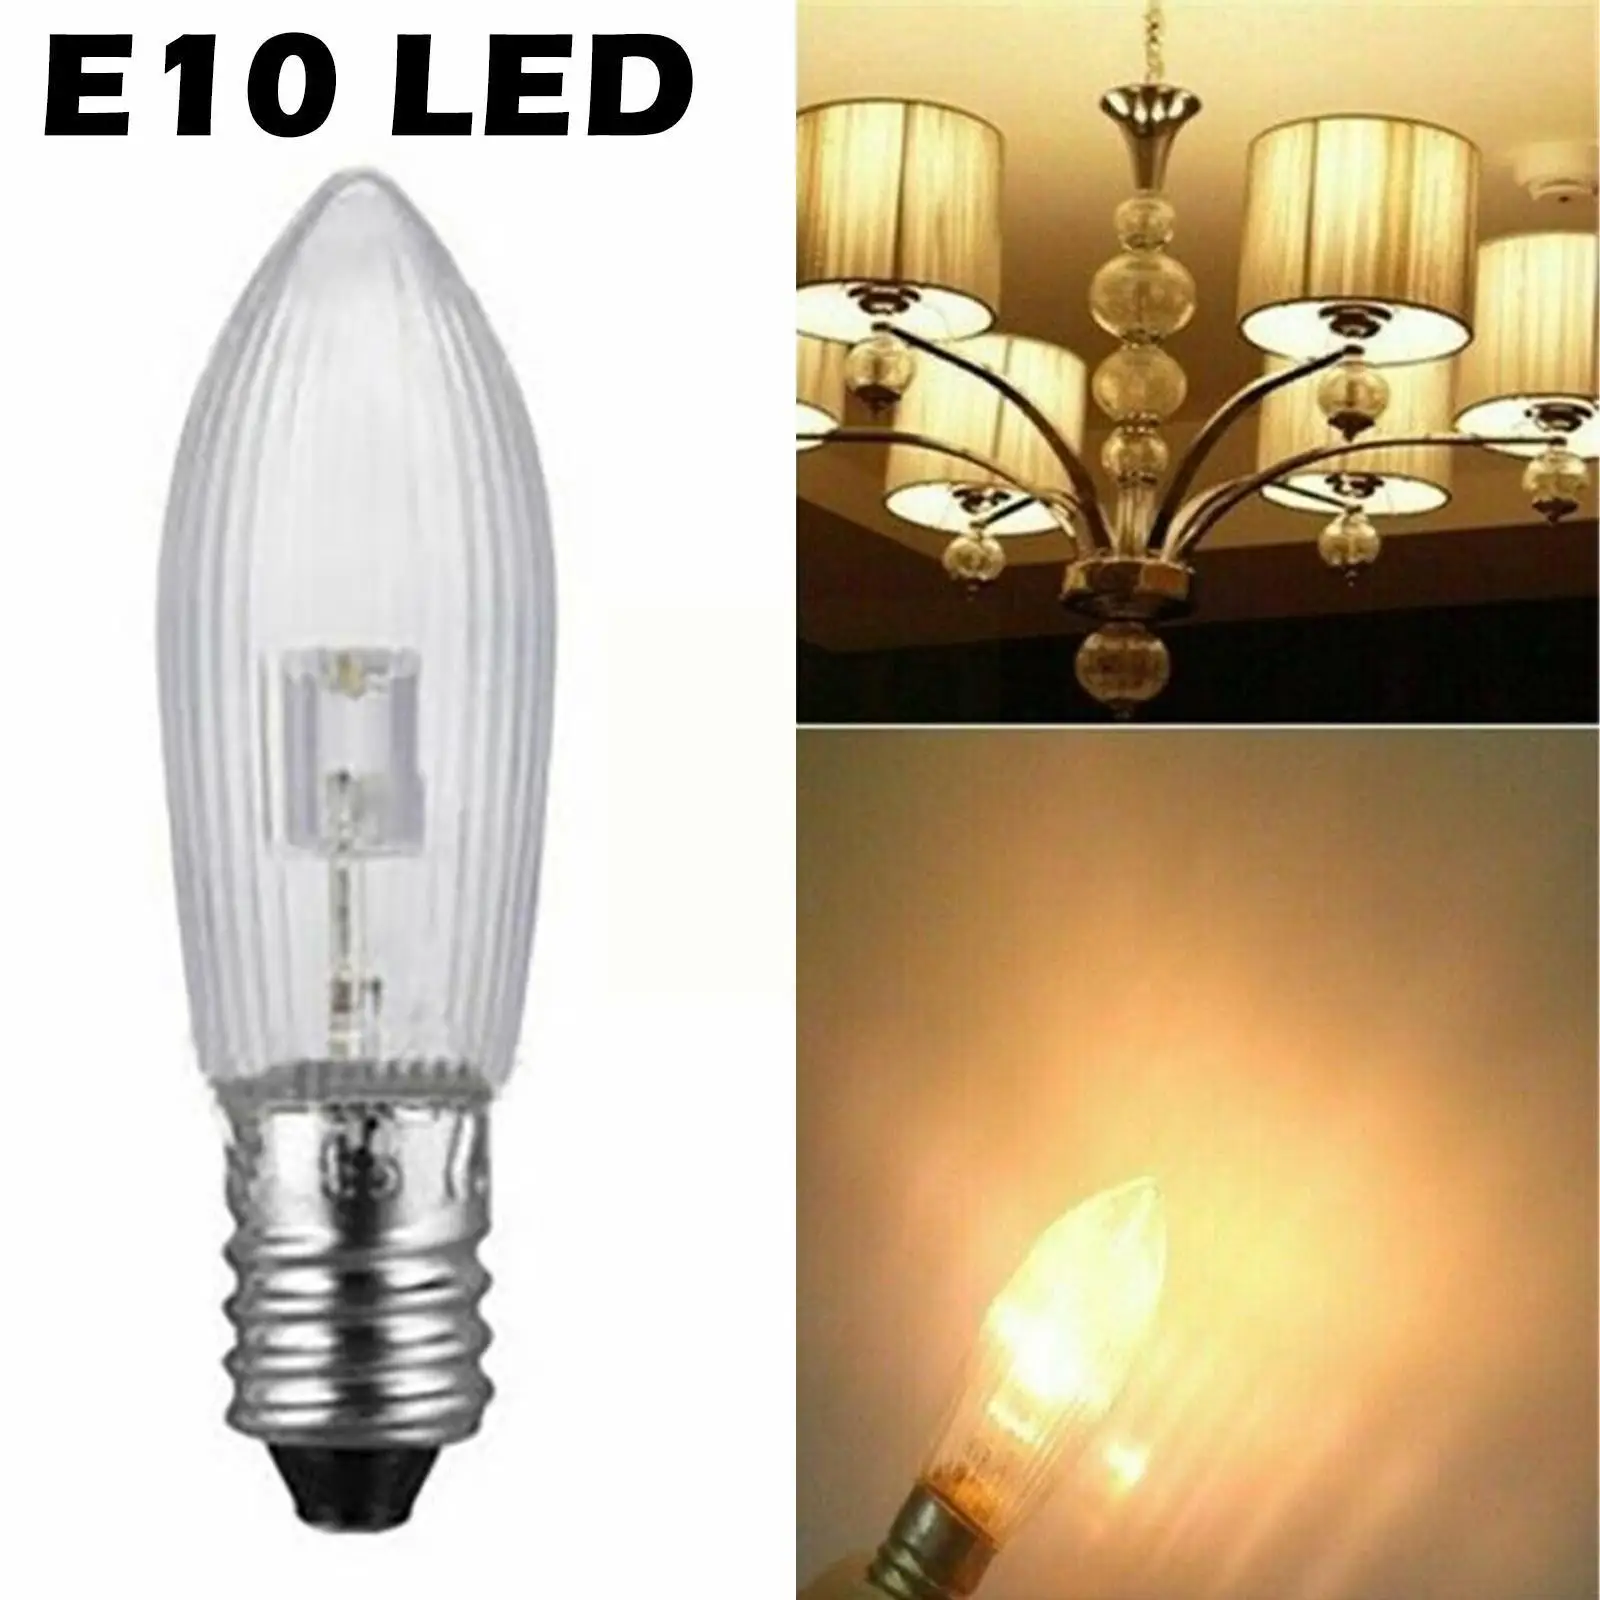 

E10 LED Bulbs Light Replacement Lamp Bulbs for Light Chains 10V-55V AC Bathroom Kitchen Home Lamps Bulb Decoration Lights I8W4